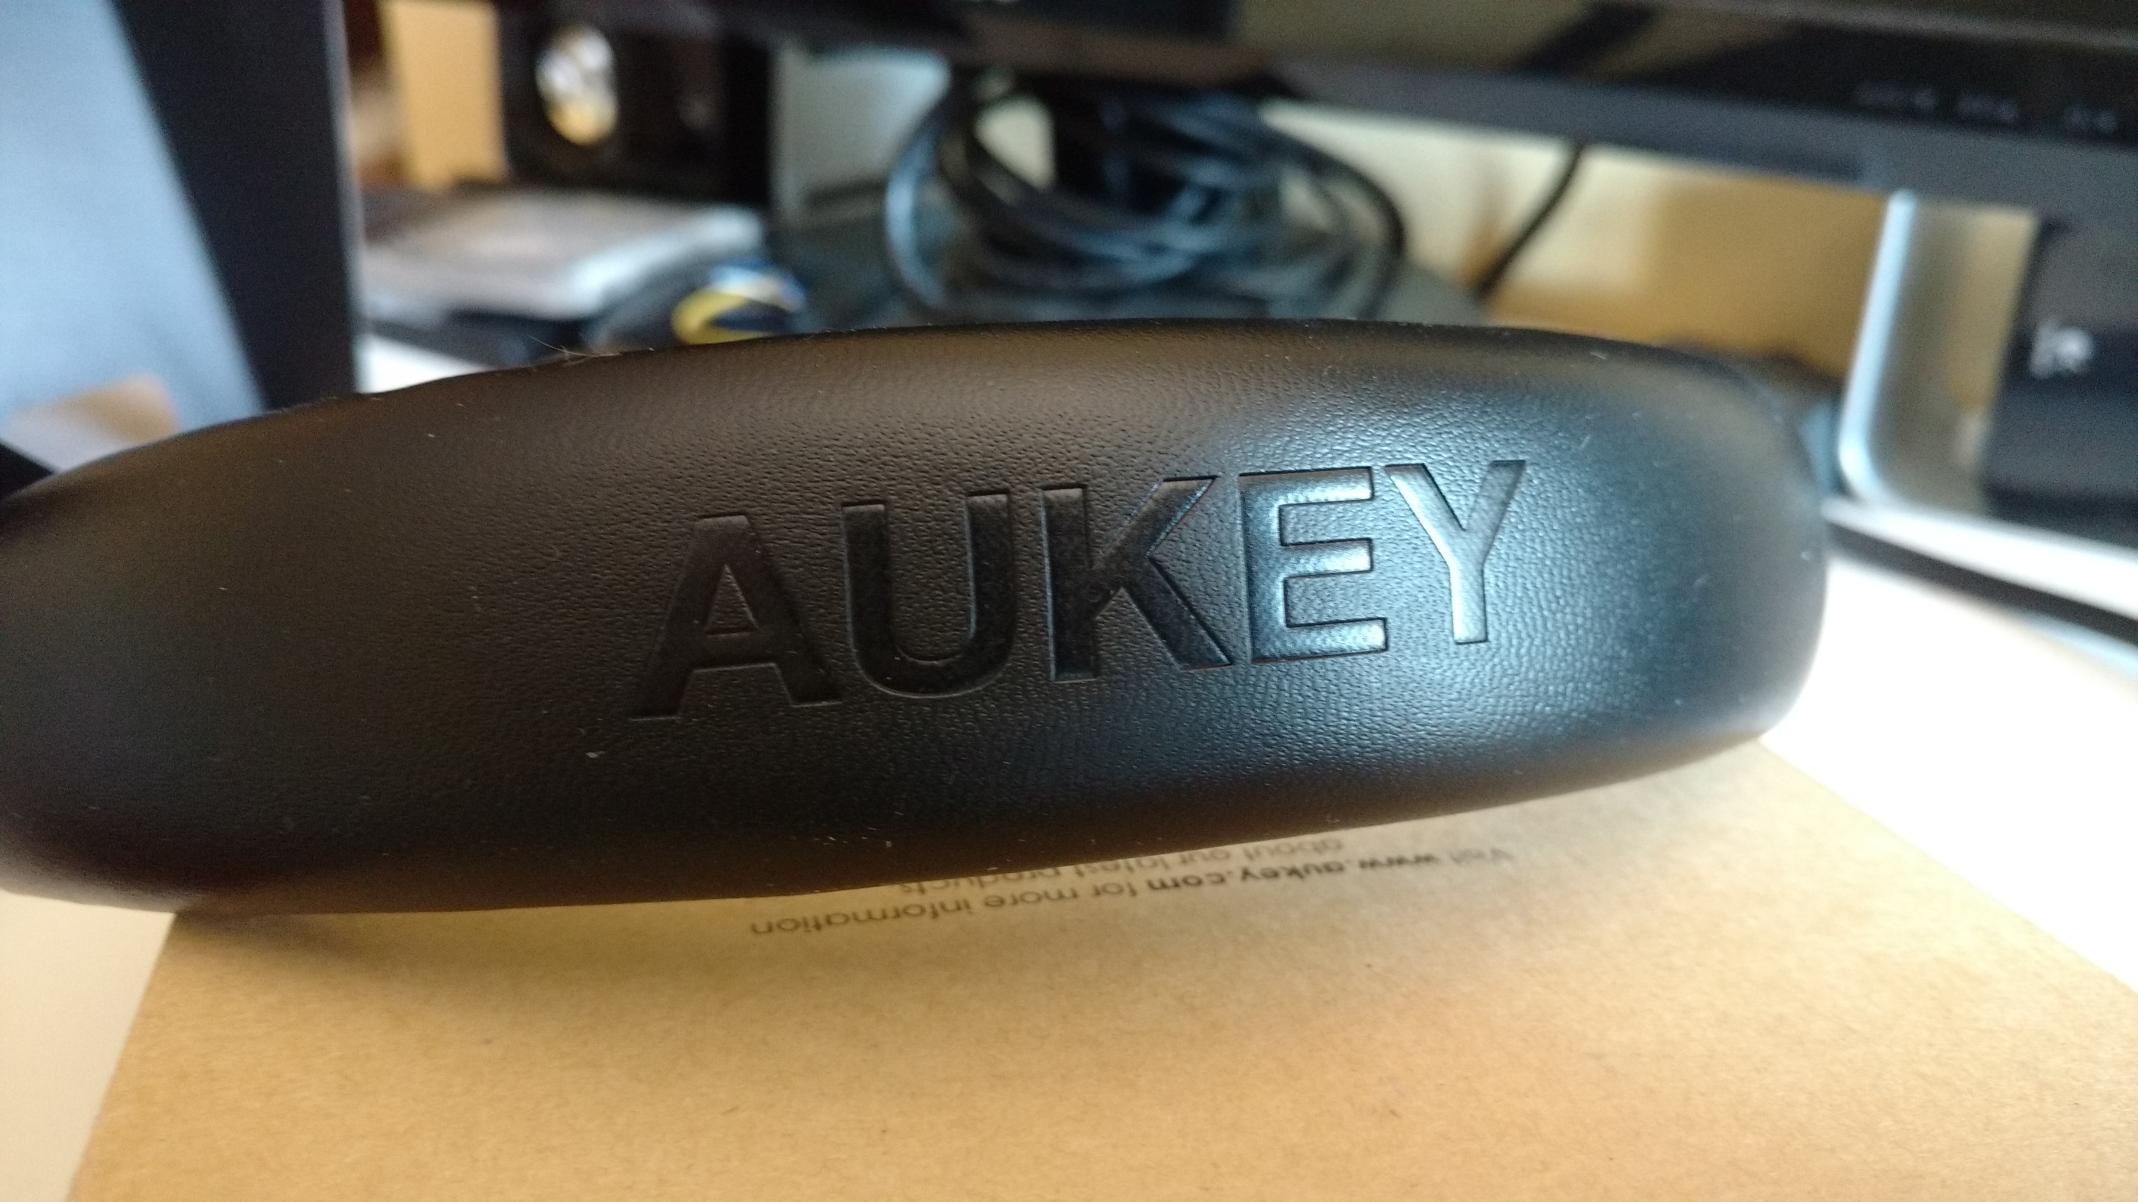 Aukey GH-S1 - Detail2